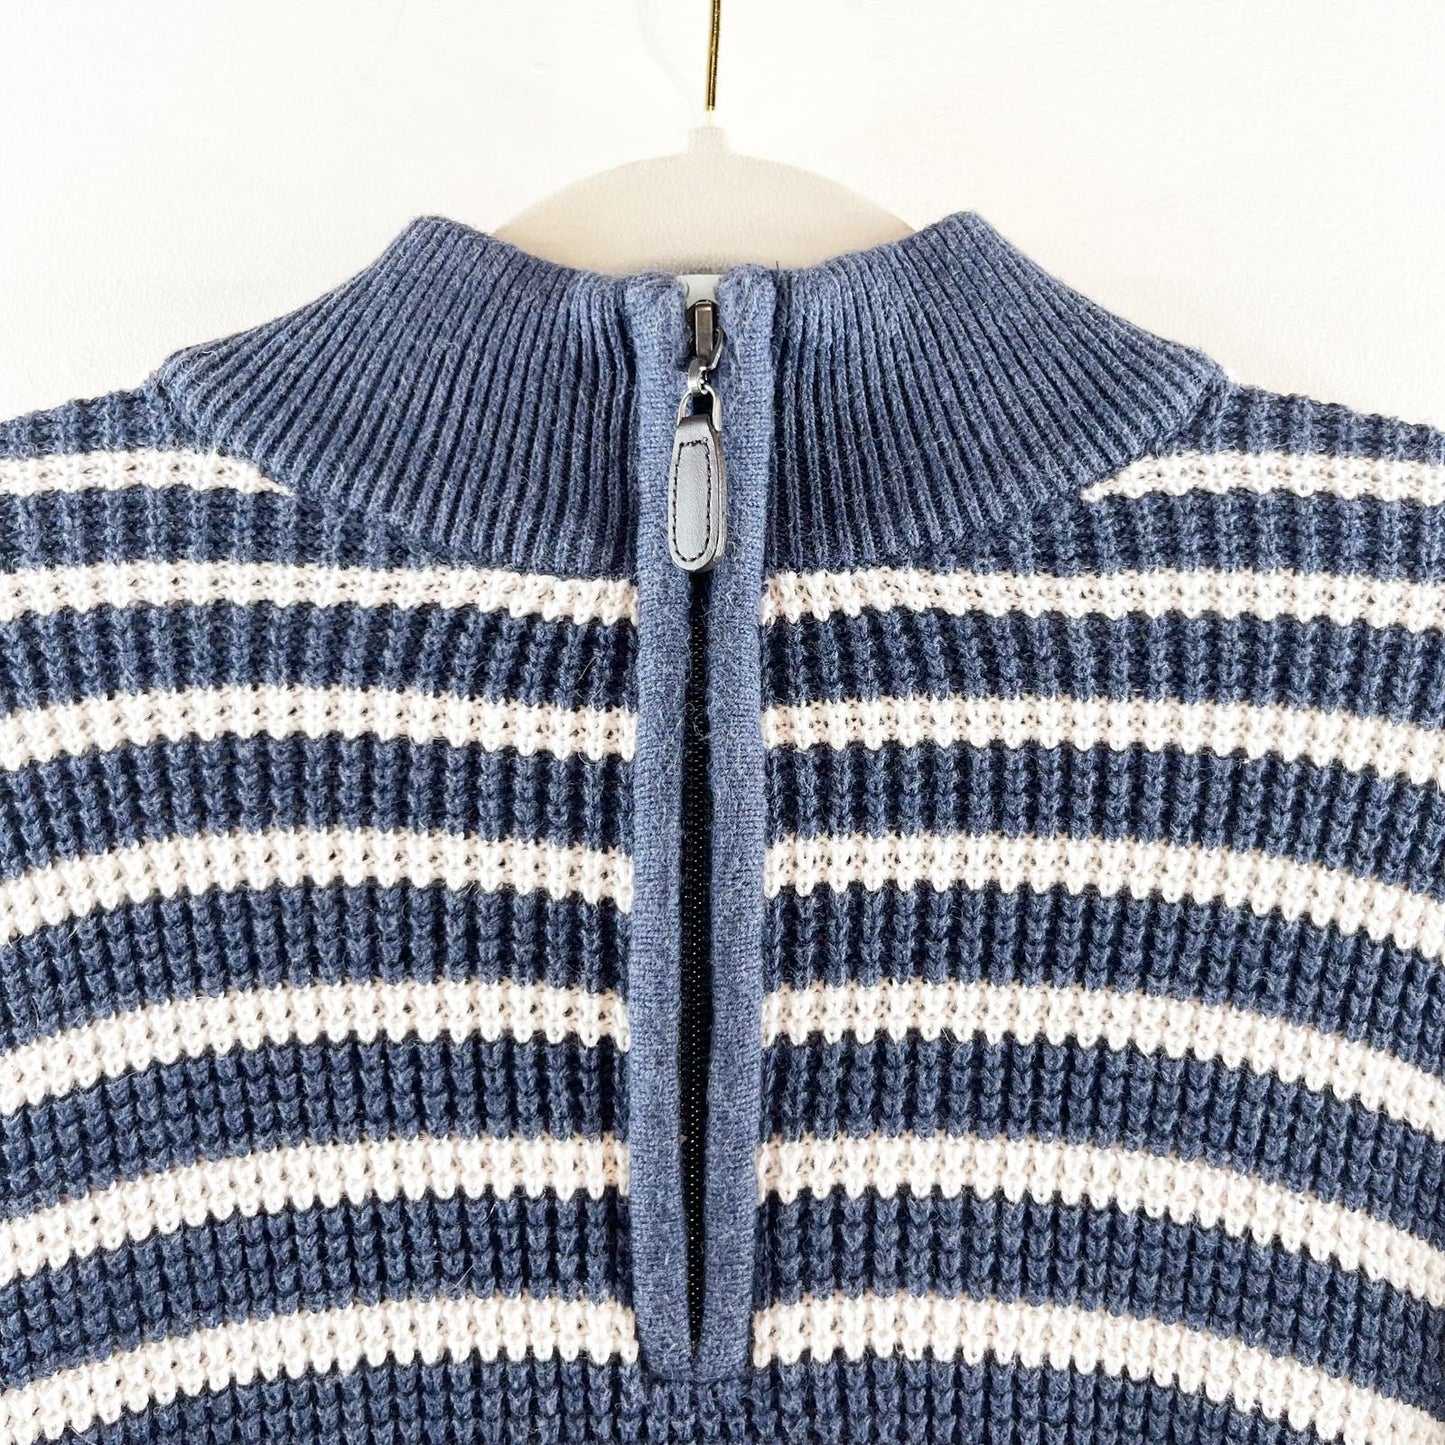 L.L. Bean Striped Cotton Cashmere 1/4 Zip Pullover Sweater Navy Blue Medium Tall